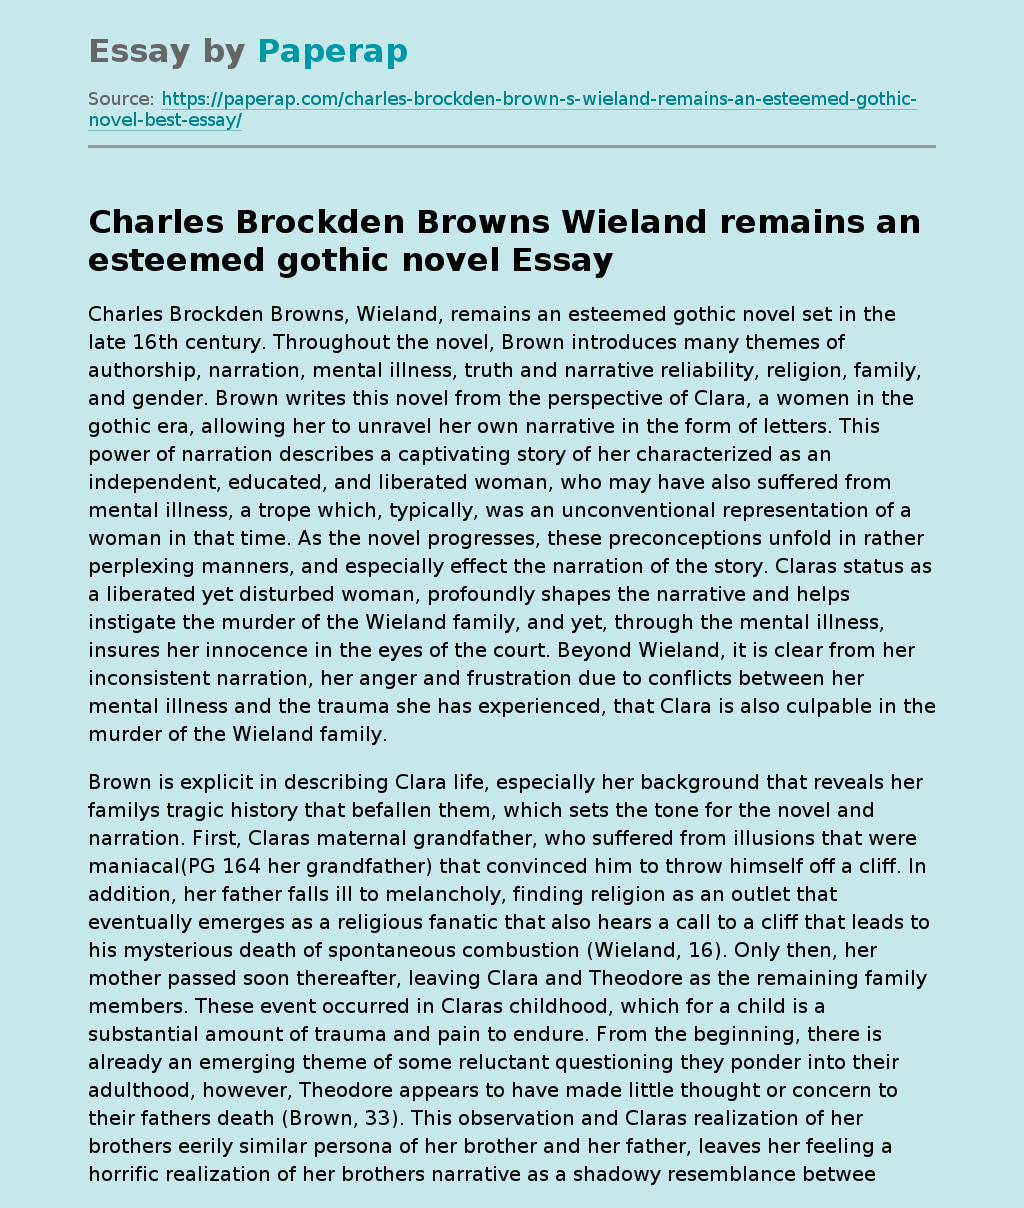 Charles Brockden Brown’s “Wieland”